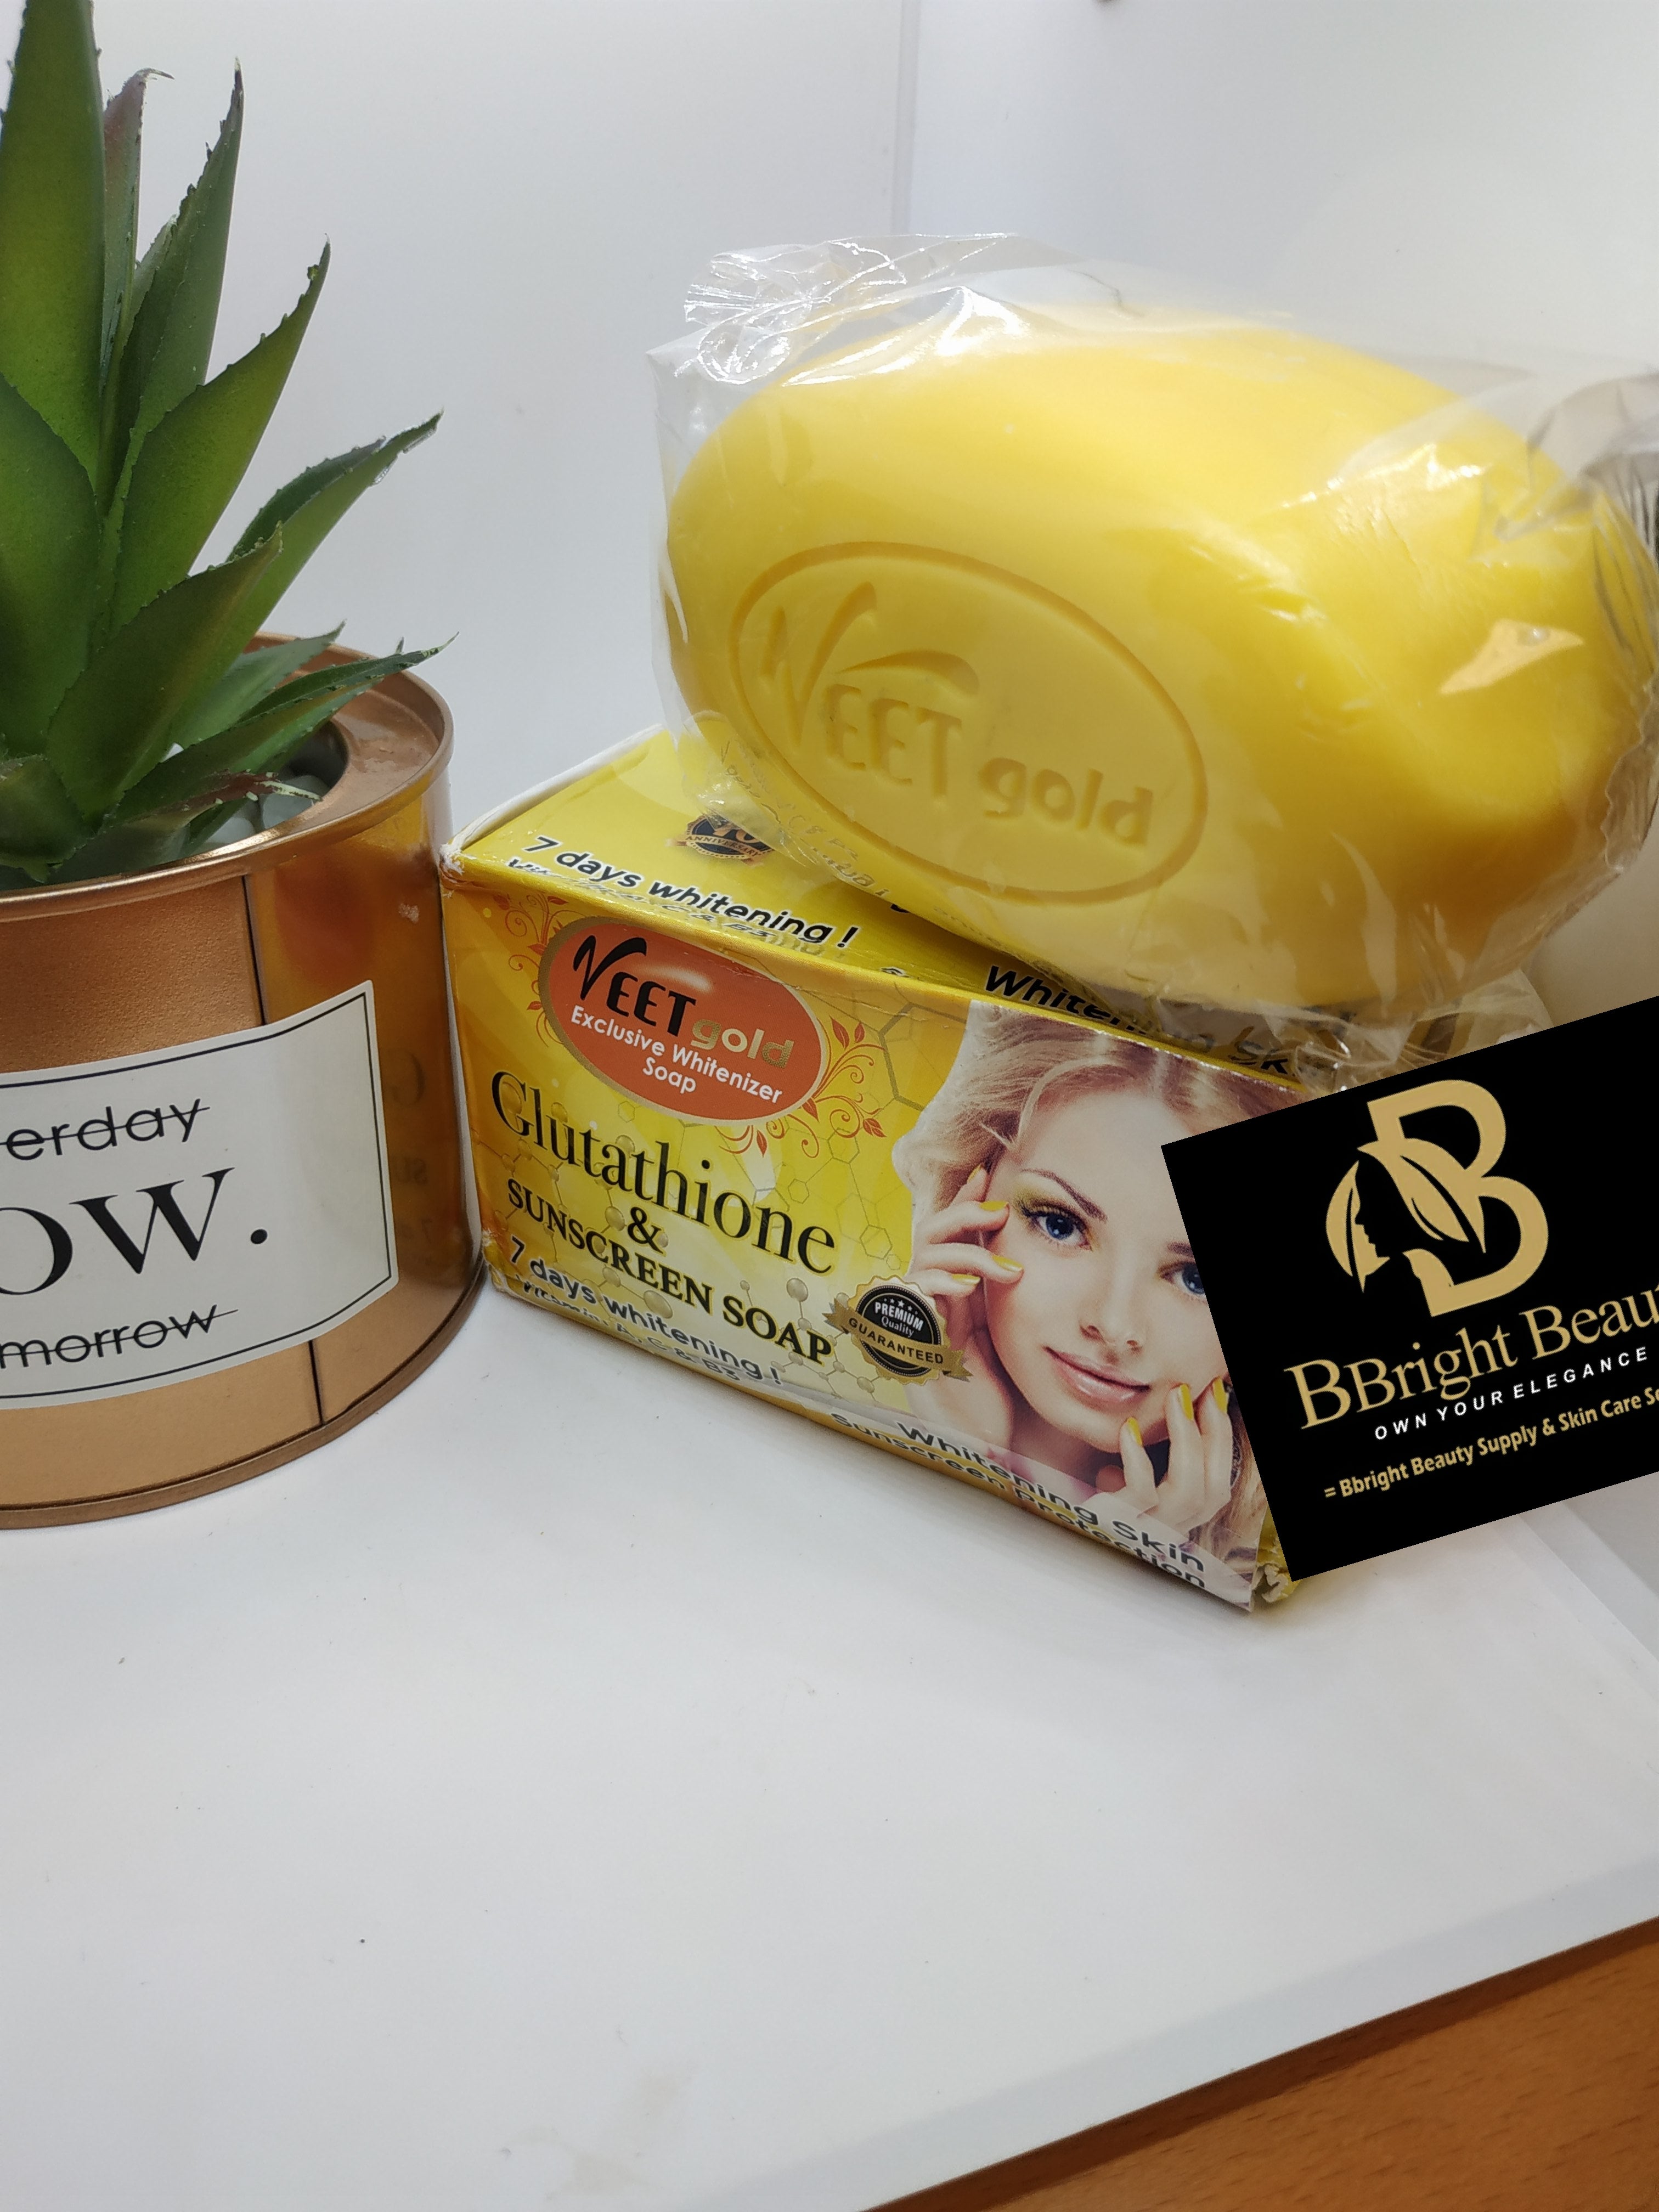 Veet Gold Exclusive Whitenizer Soap Glutathione & Sunscreen Soap 7 days whitening Vit.A,C & B3 200g